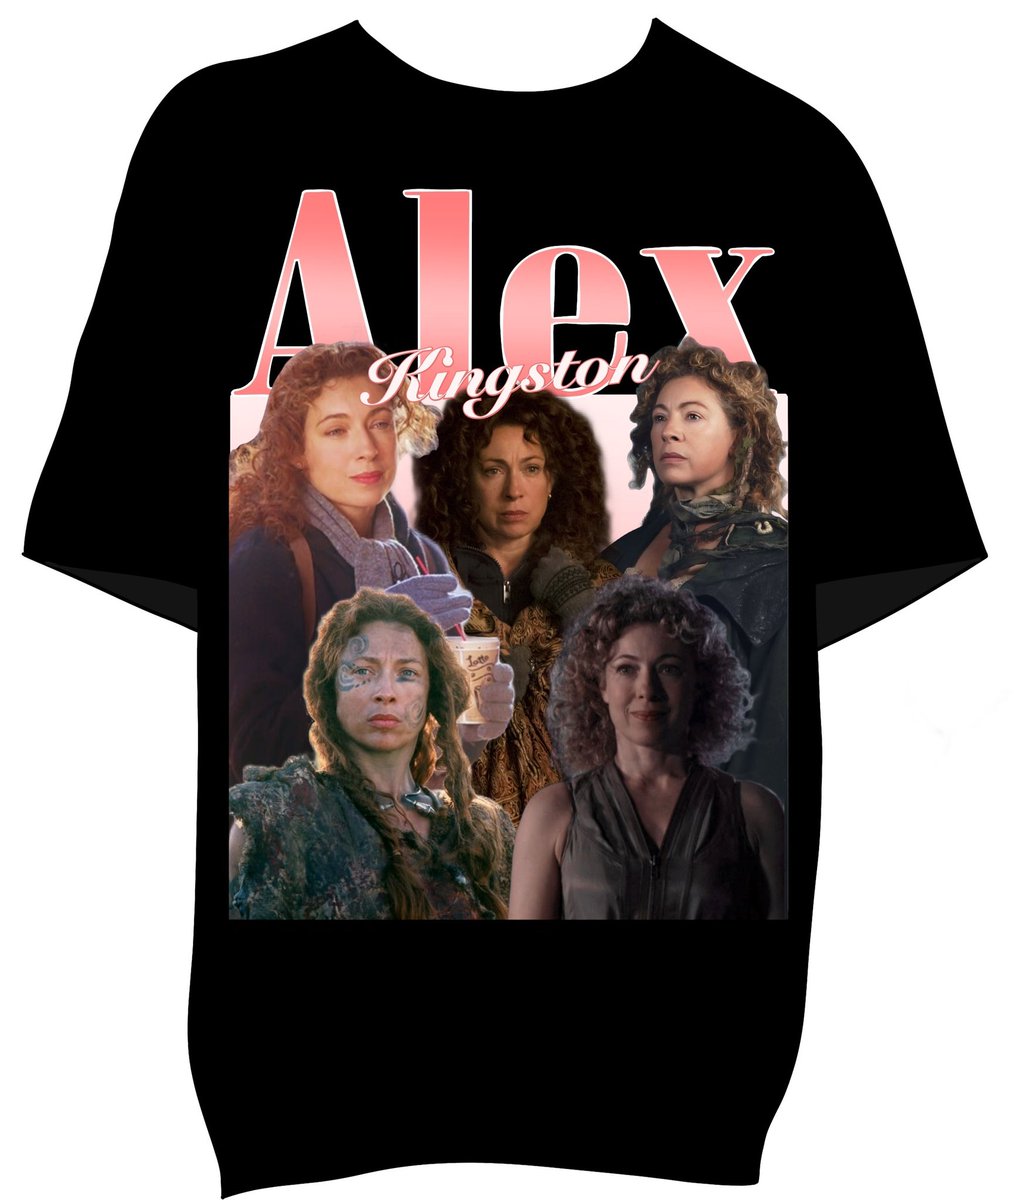 Alex Kingston shirt!!

(I just made it)

#alexkingston #doctorwho #customshirt